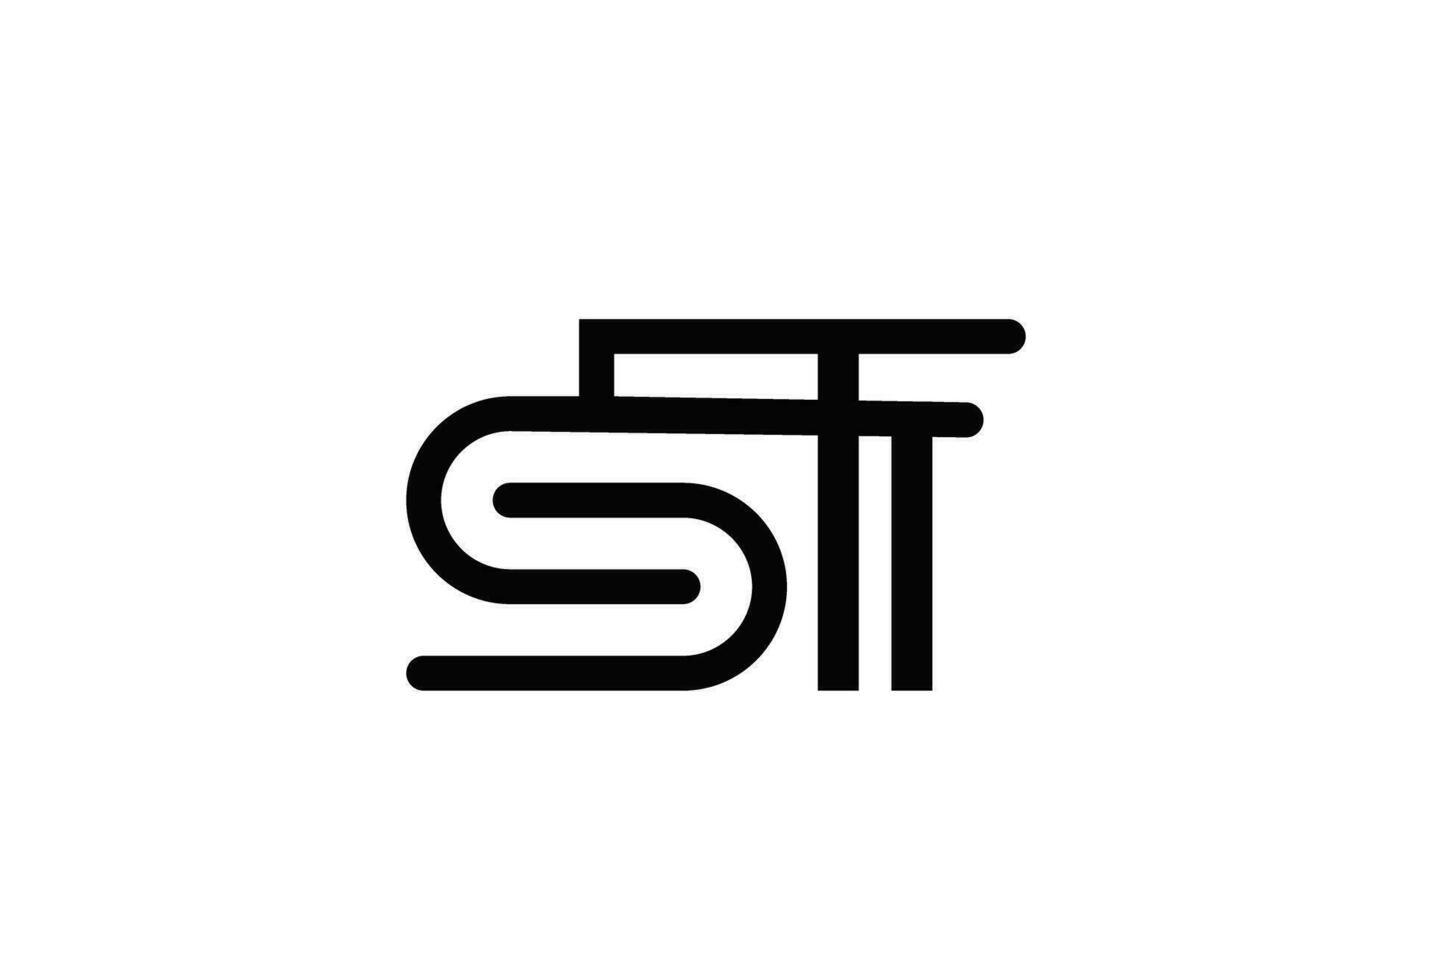 st Monogramm Logo kostenlos vektor